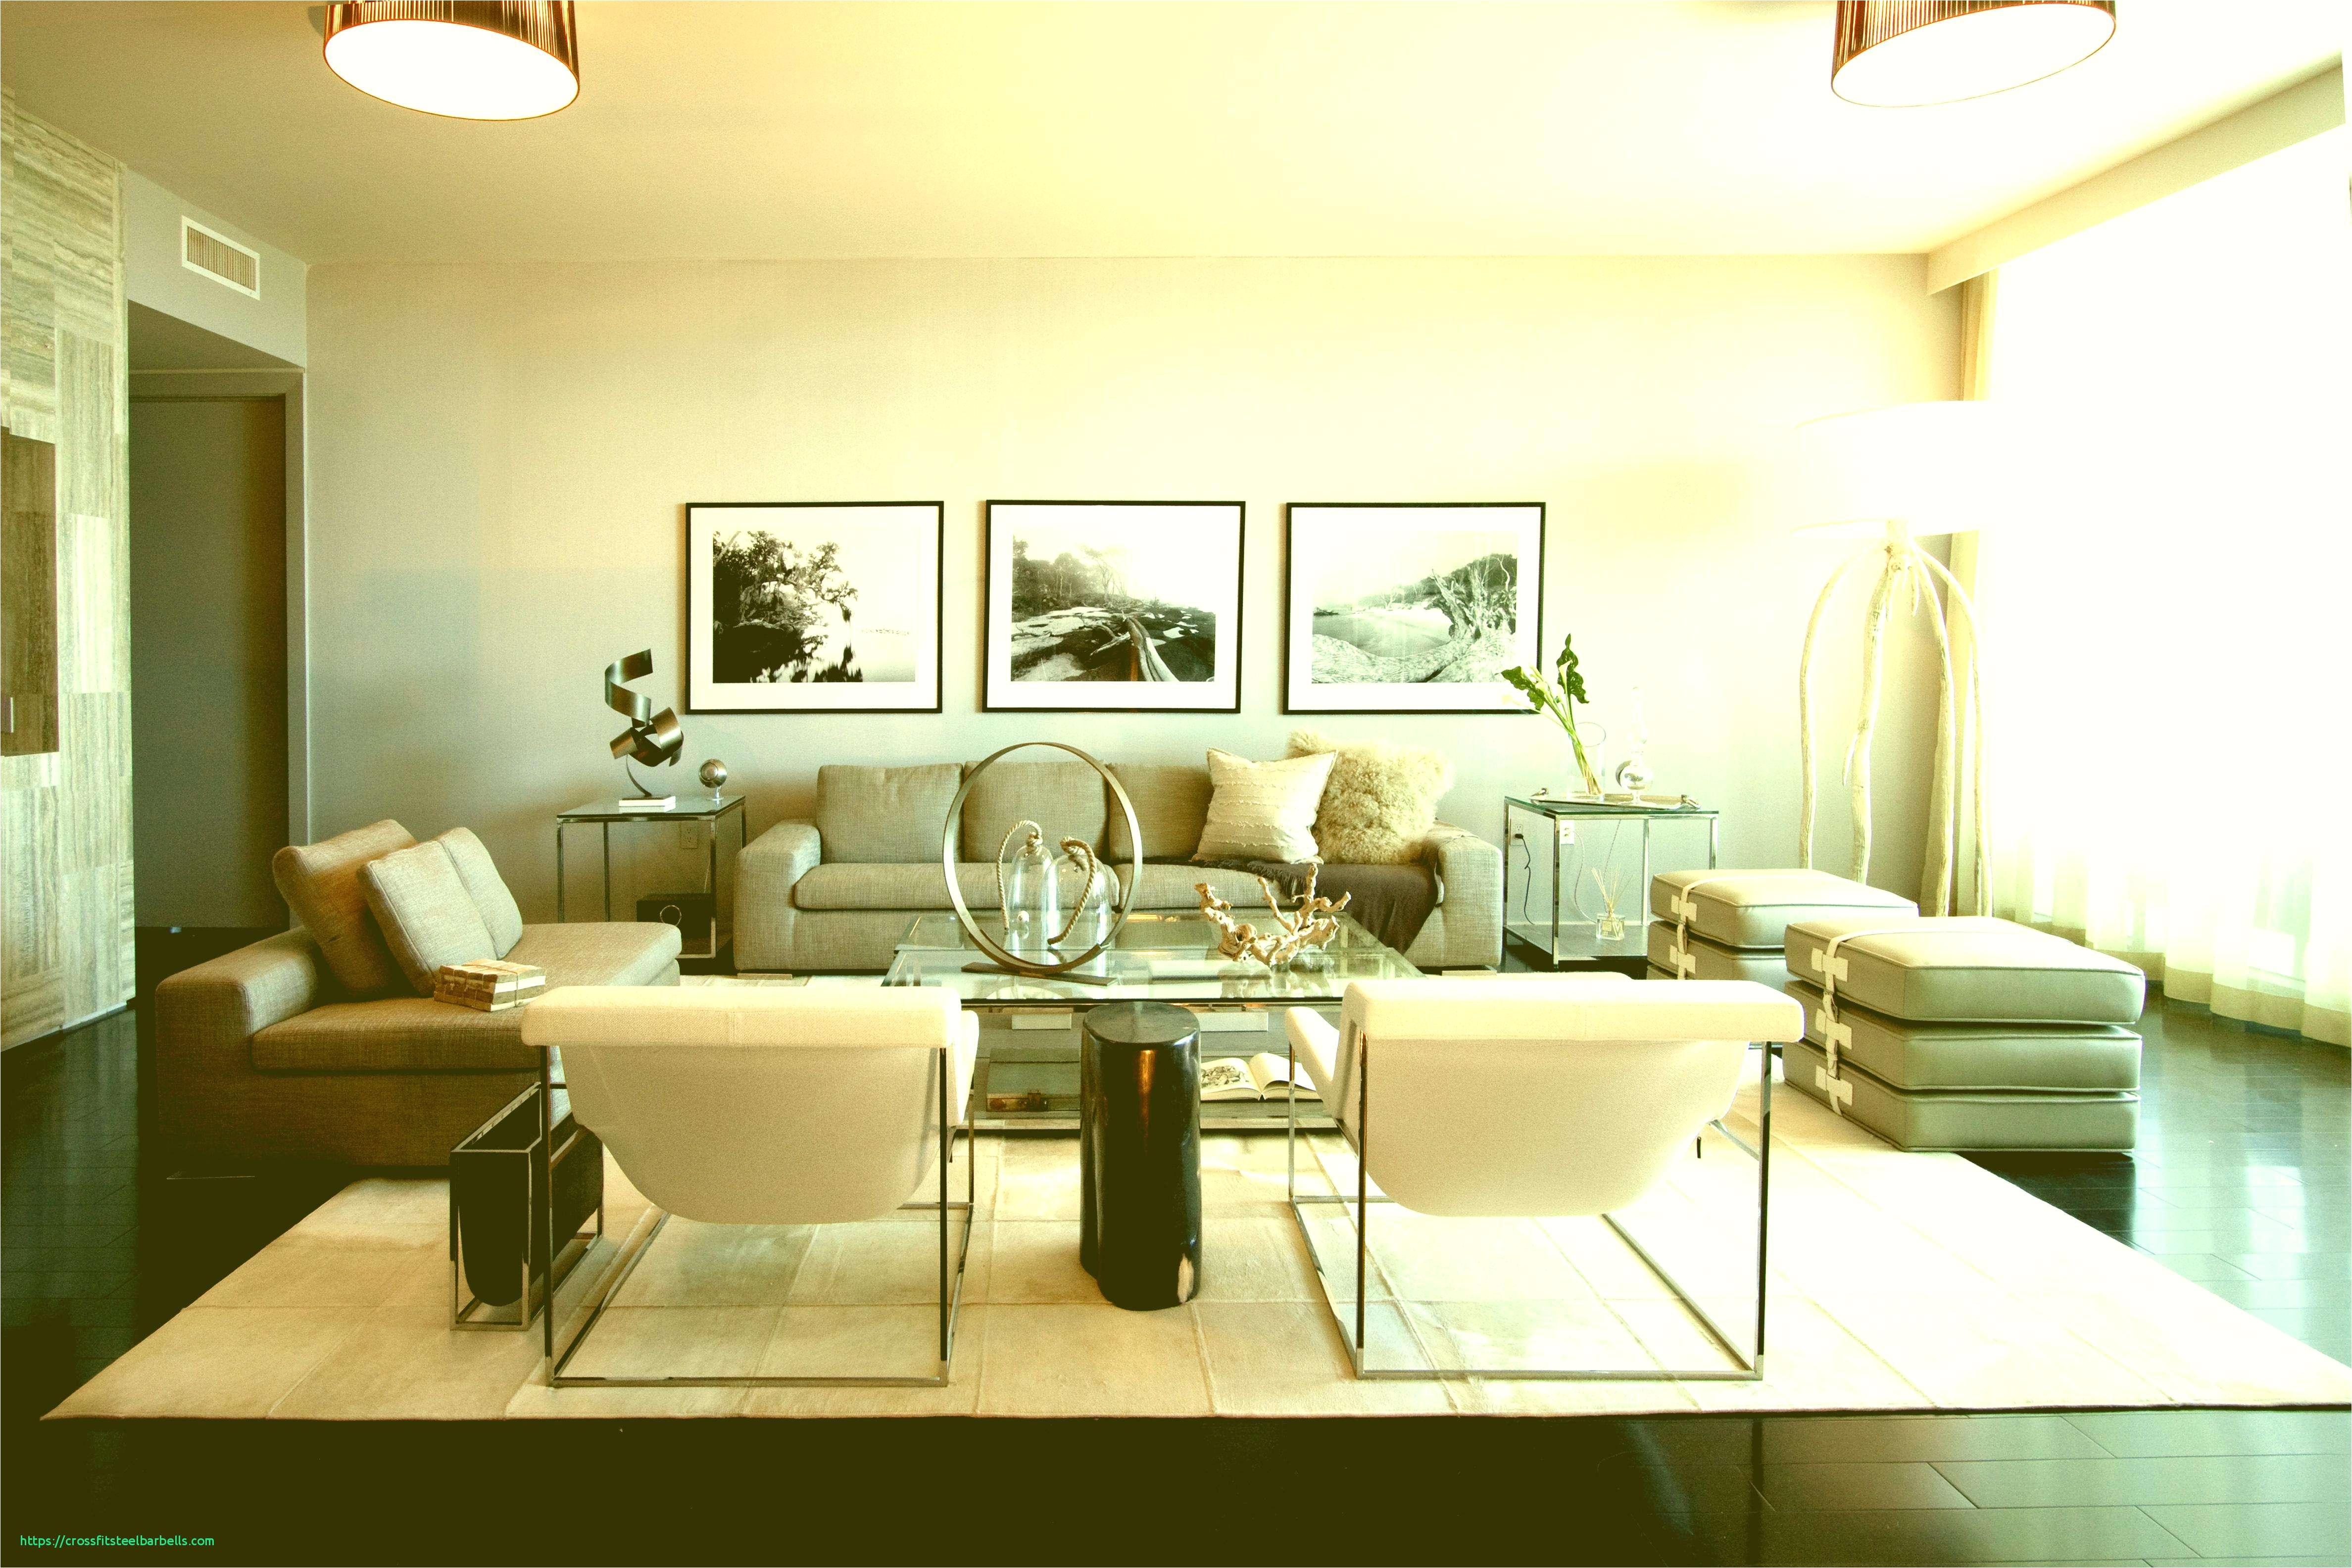 luxury accredited interior design courses online uk